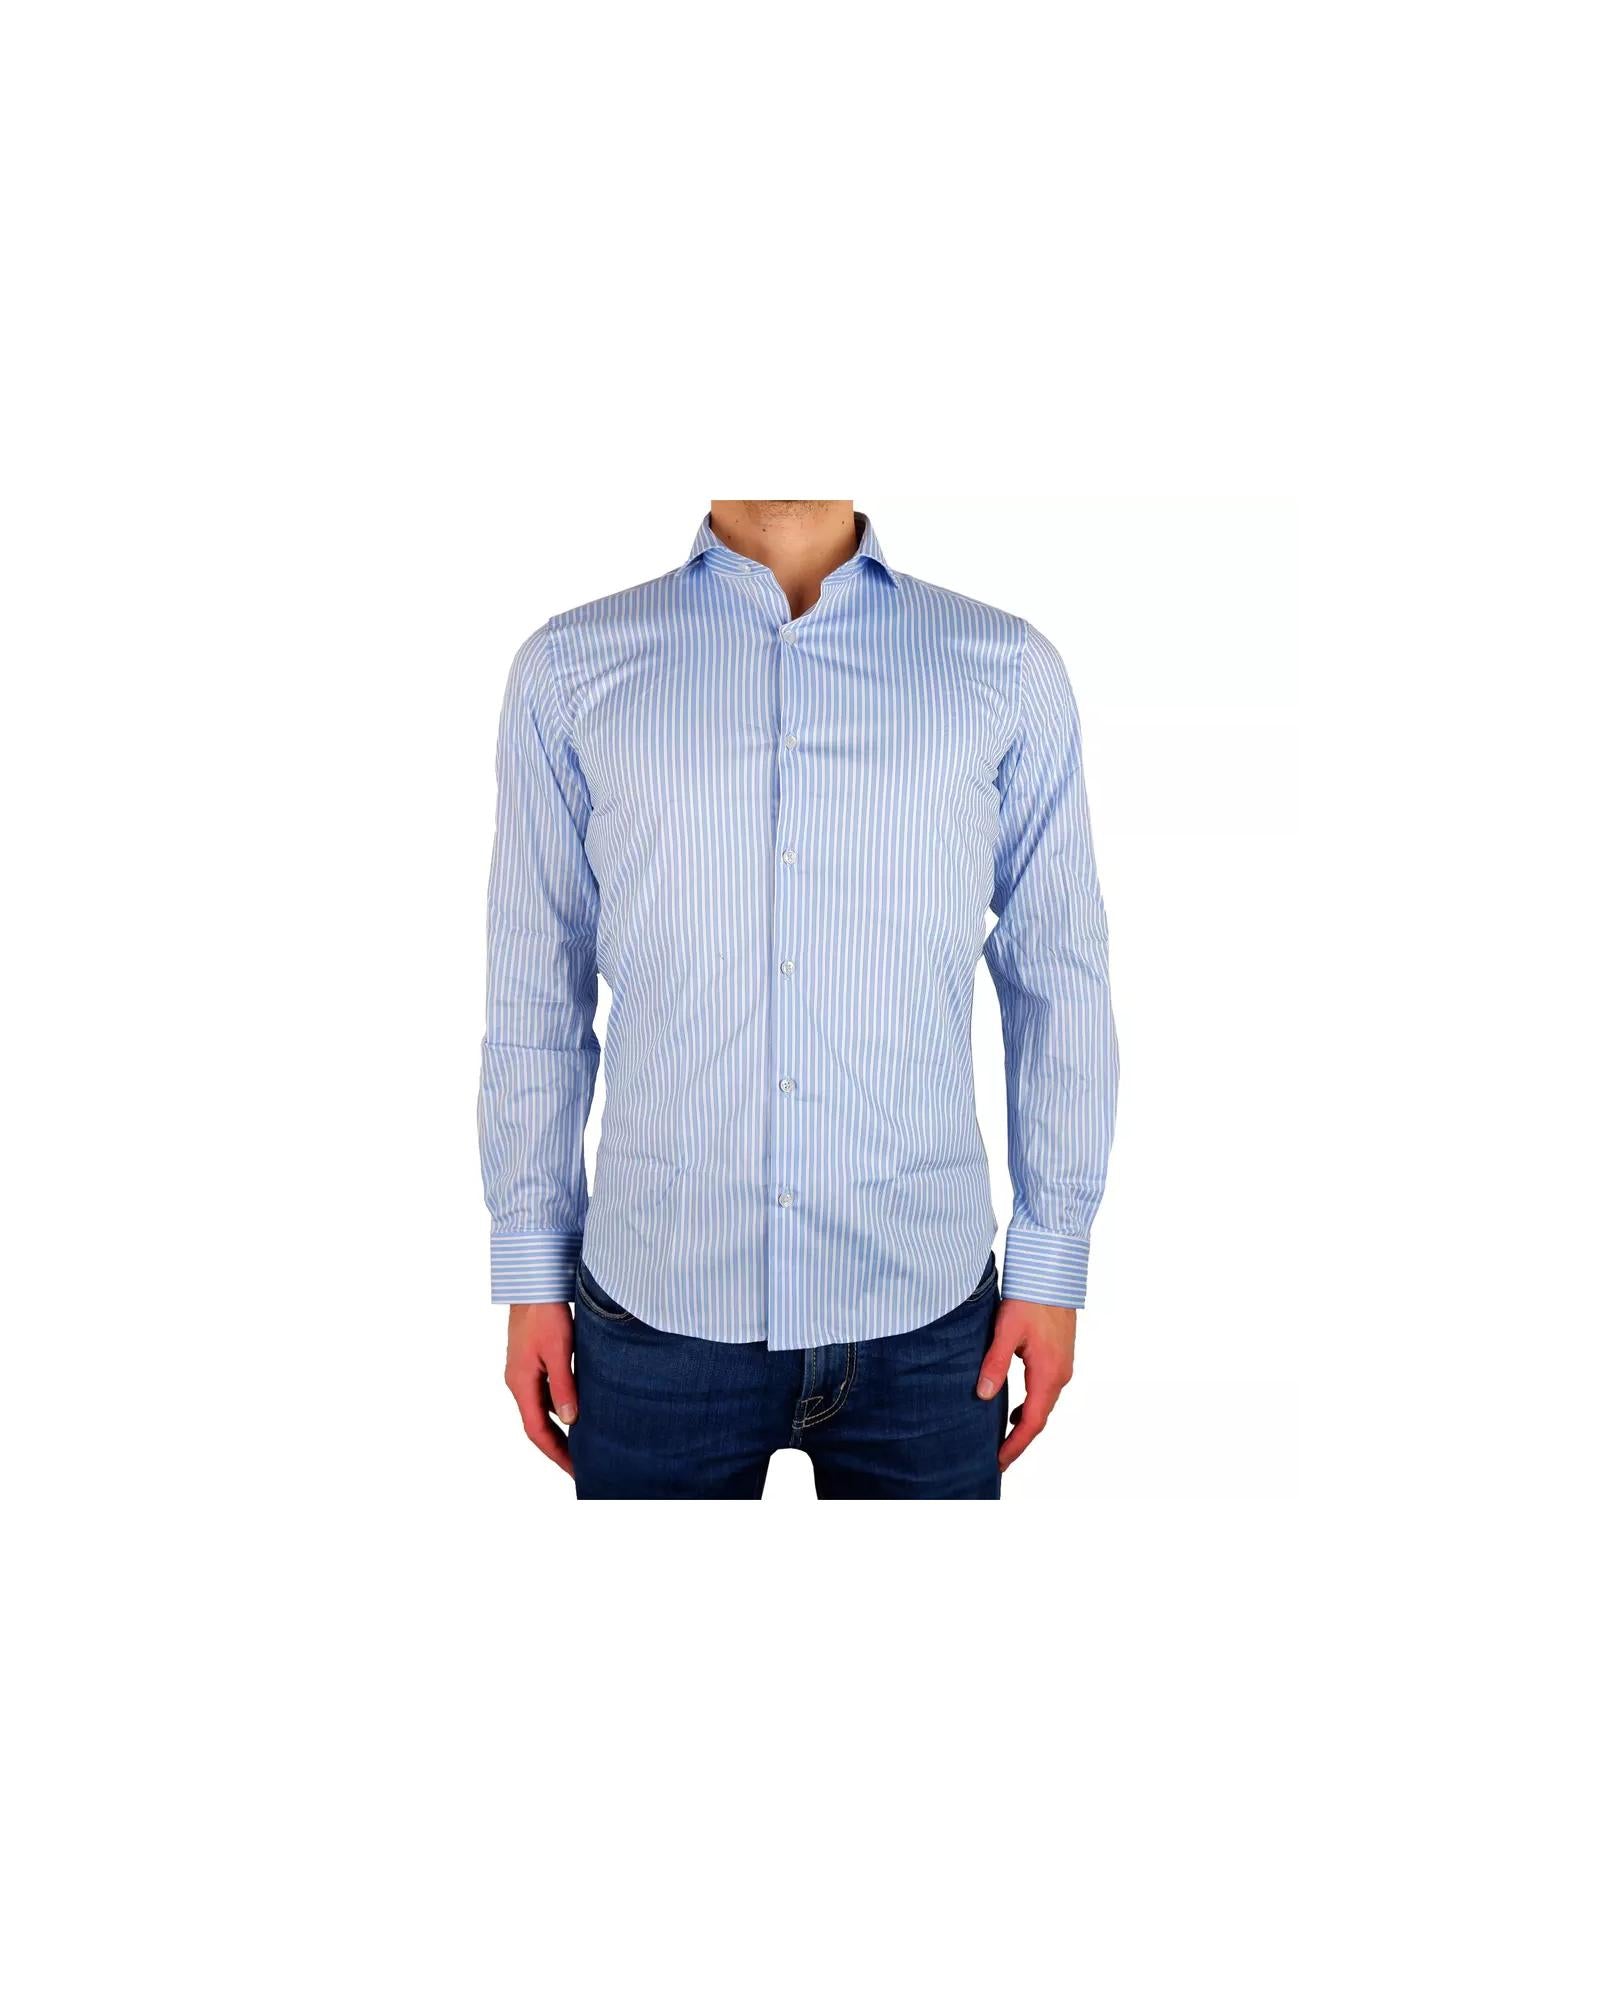 Milano Light Blue Striped Shirt - 100% Cotton 41 IT Men